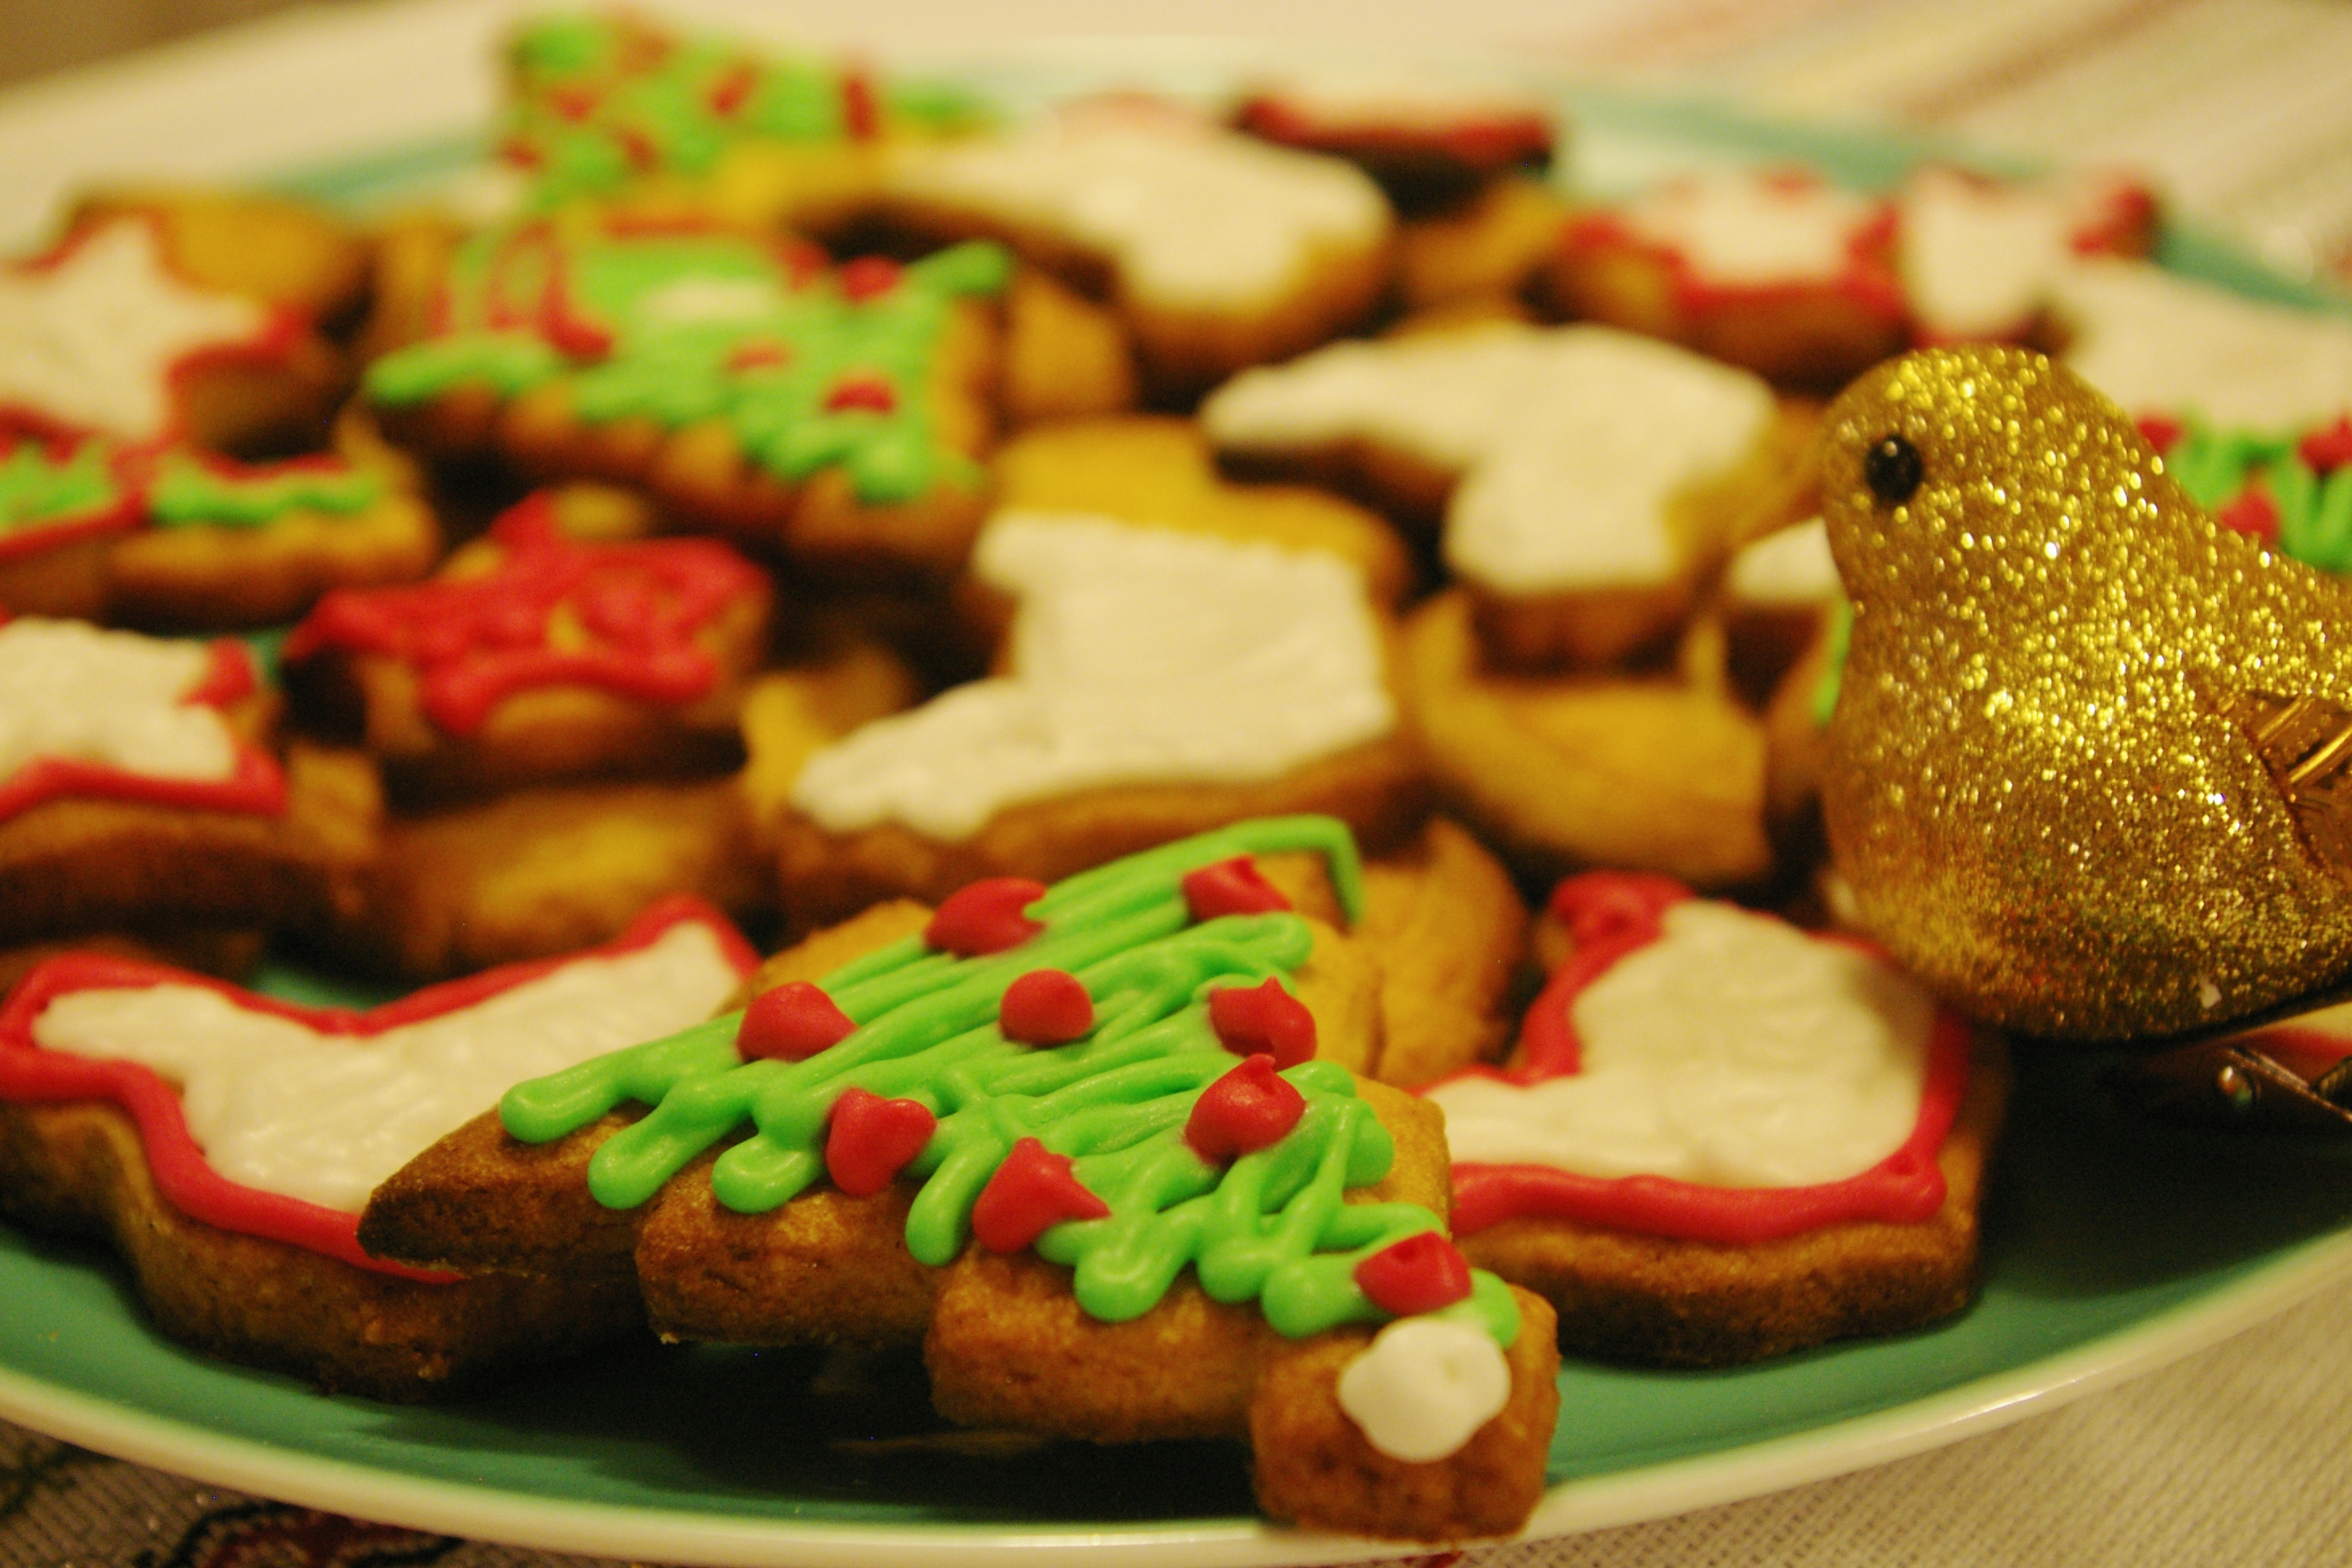 Biscuits de Noël en glaçage royal 